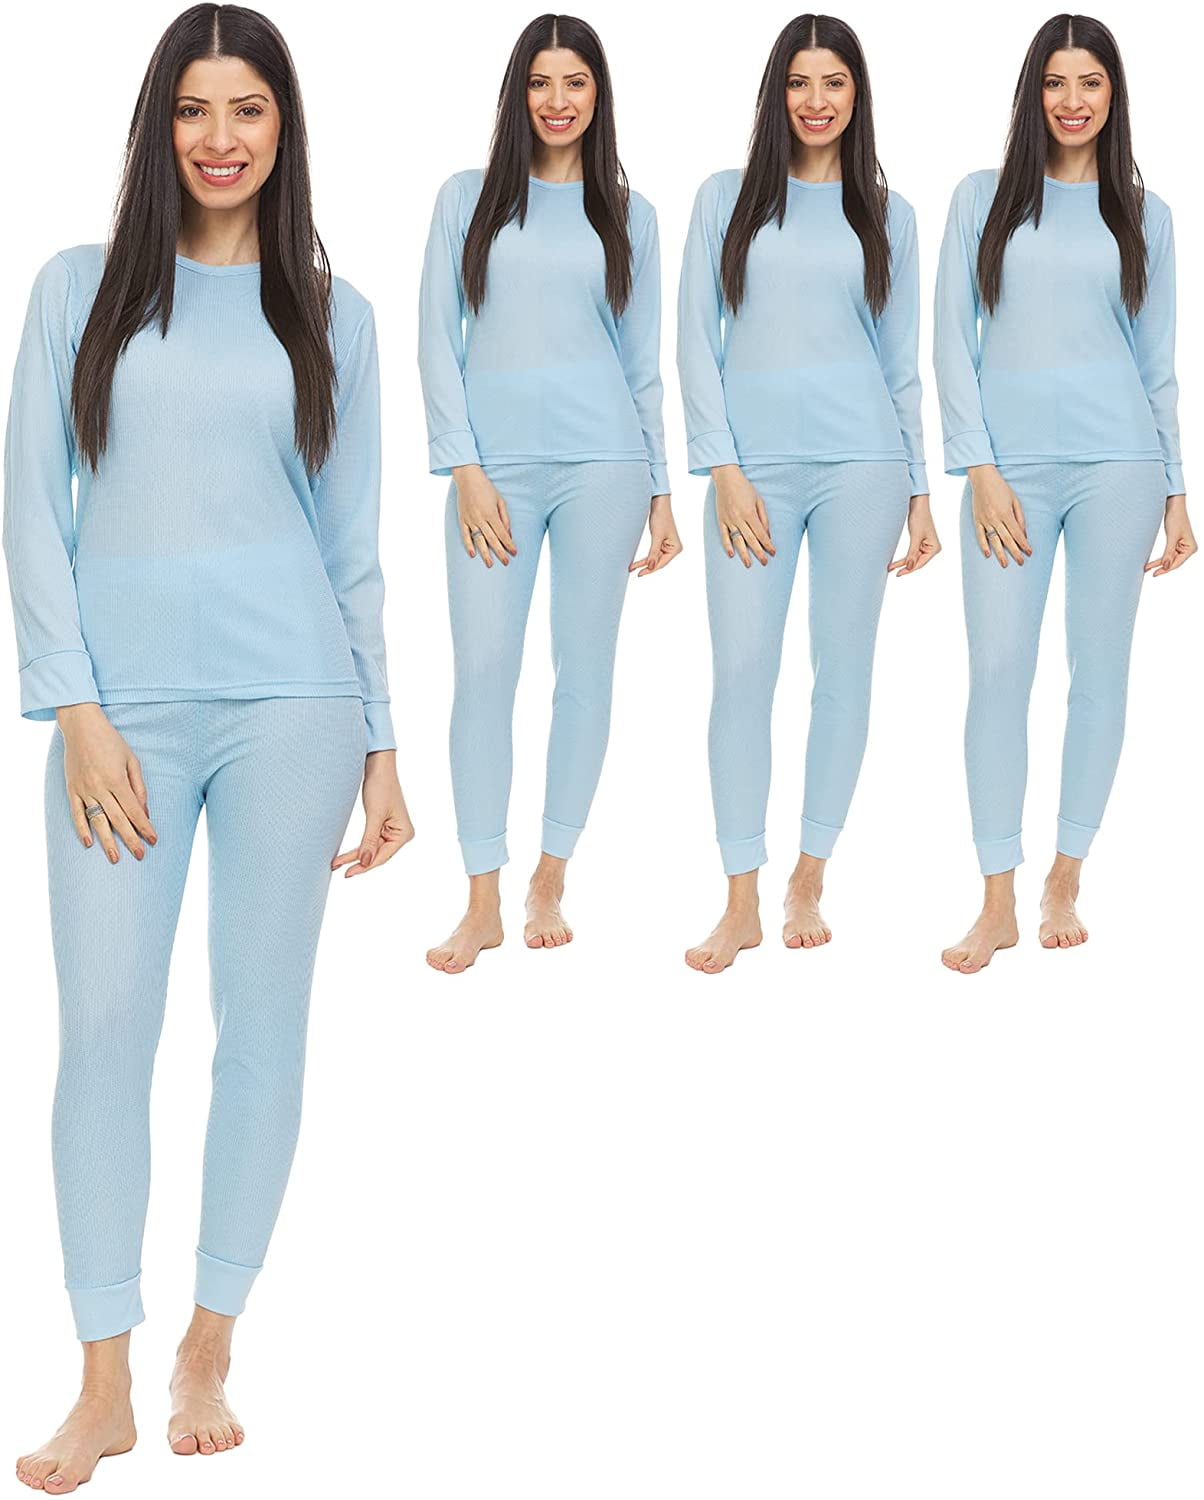 Buy Women's Thermal Underwear Set Thin Light Long Johns Base Layer